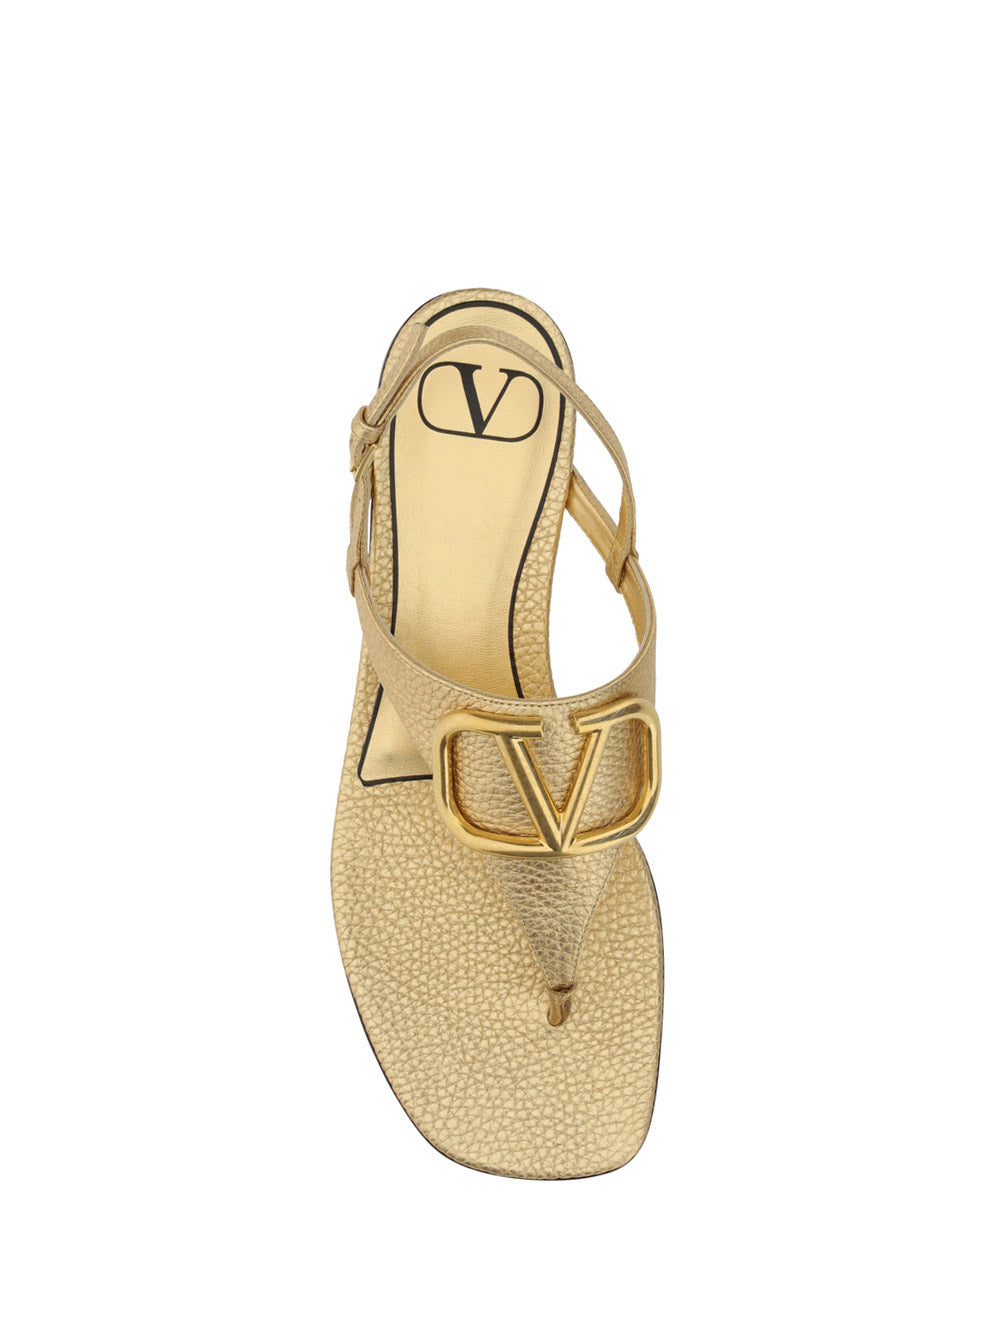 VLogo Signature Flat Thong Sandal in Grainy Calfskin - gold